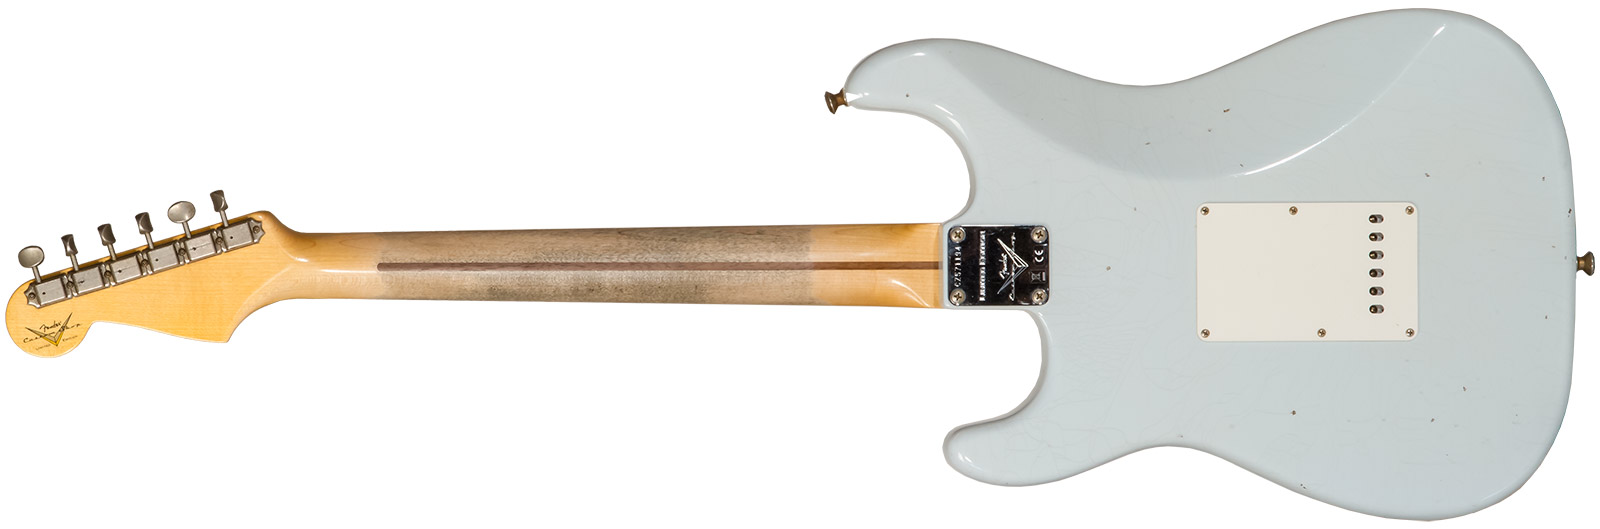 Fender Custom Shop Strat Tomatillo Special 3s Trem Mn #cz571194 - Journeyman Relic Aged Sonic Blue - E-Gitarre in Str-Form - Variation 1